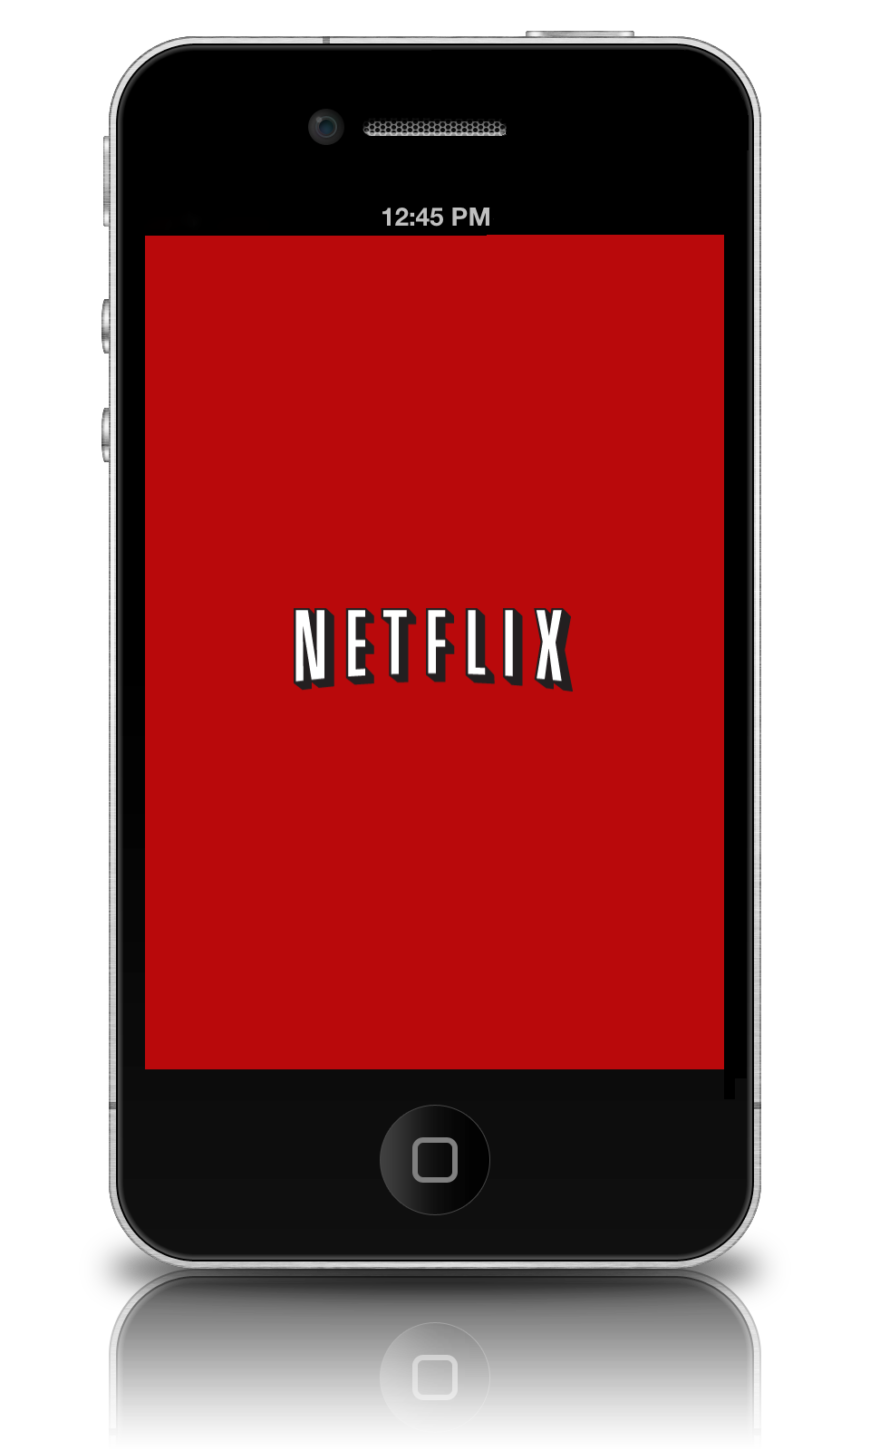 Netflix app on iphone